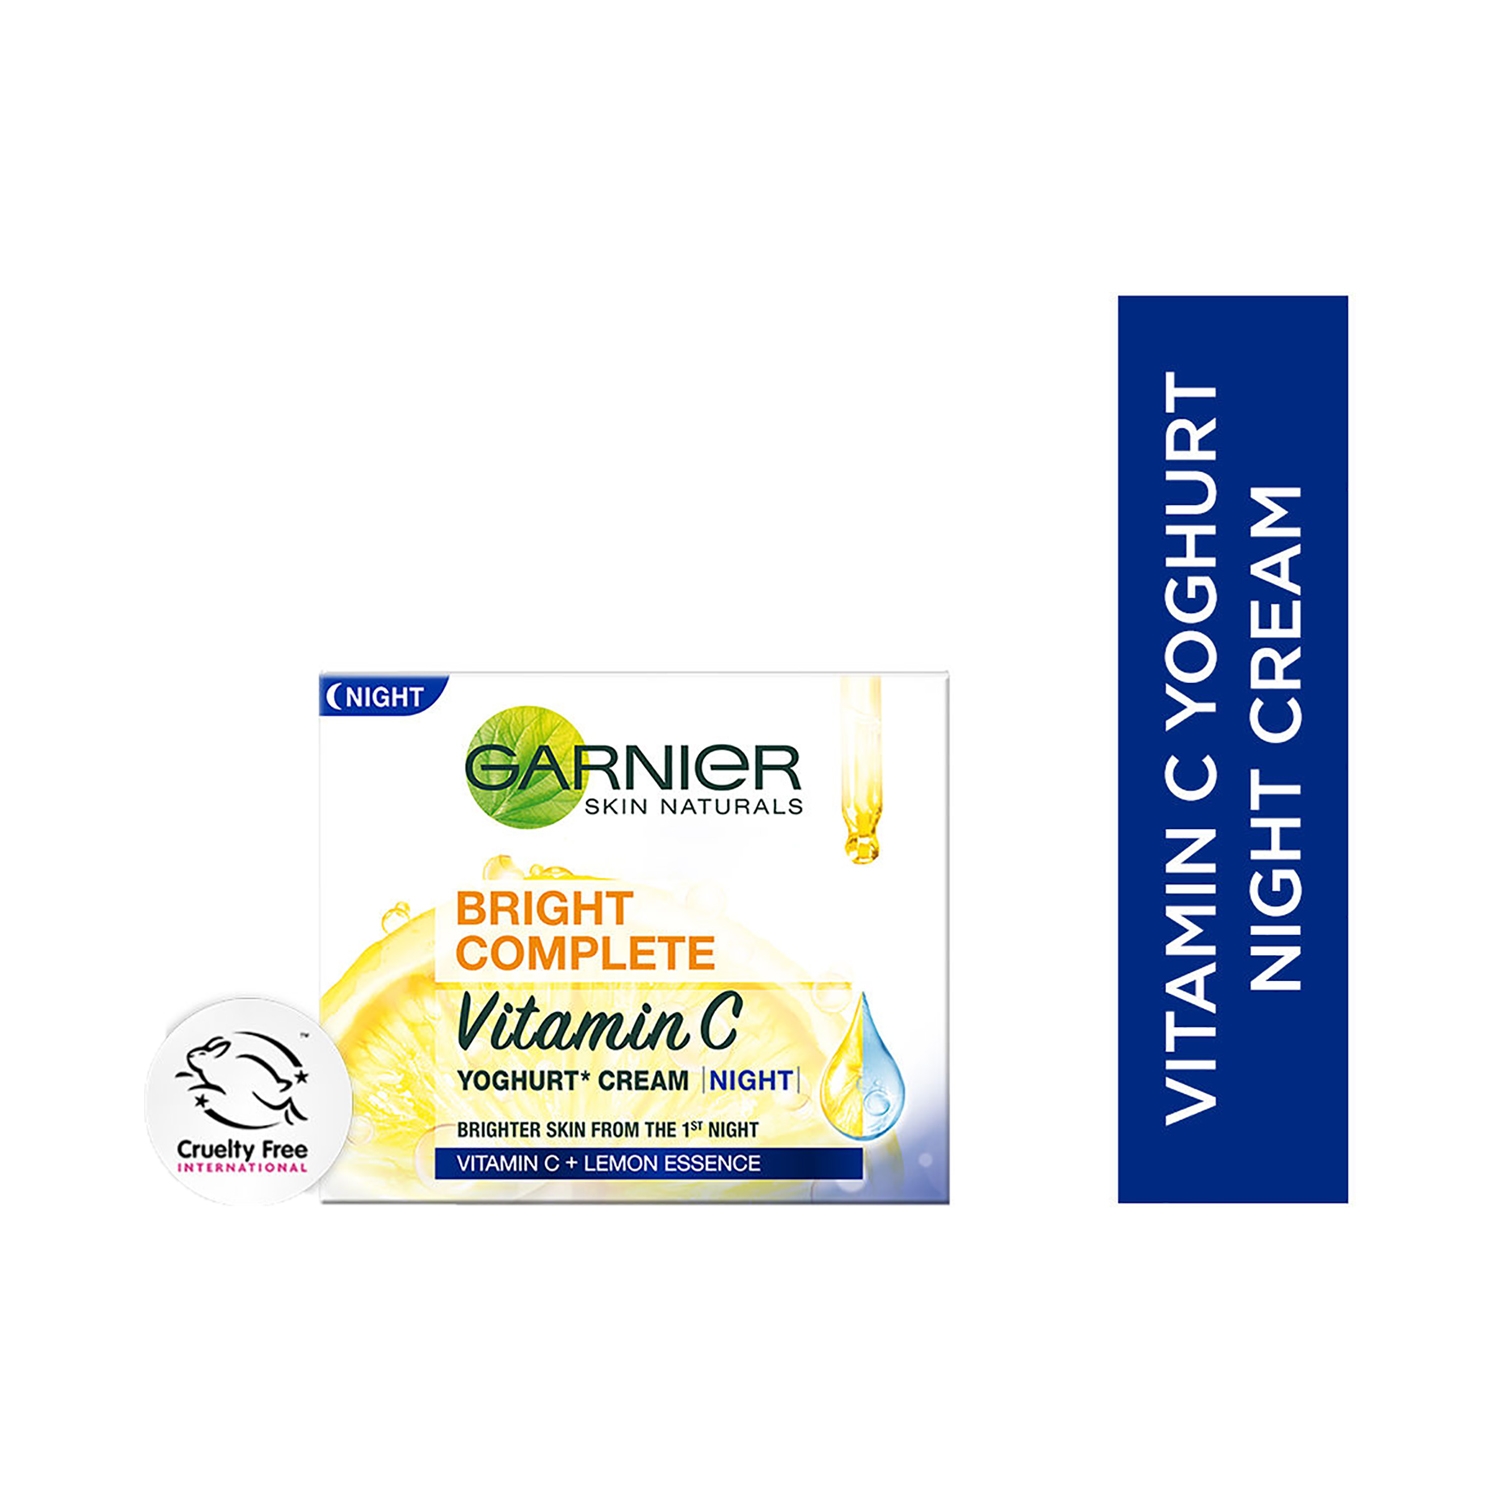 Garnier Skin Natural Bright Complete Vitamin C Serum Cream 45g Lemon Essence